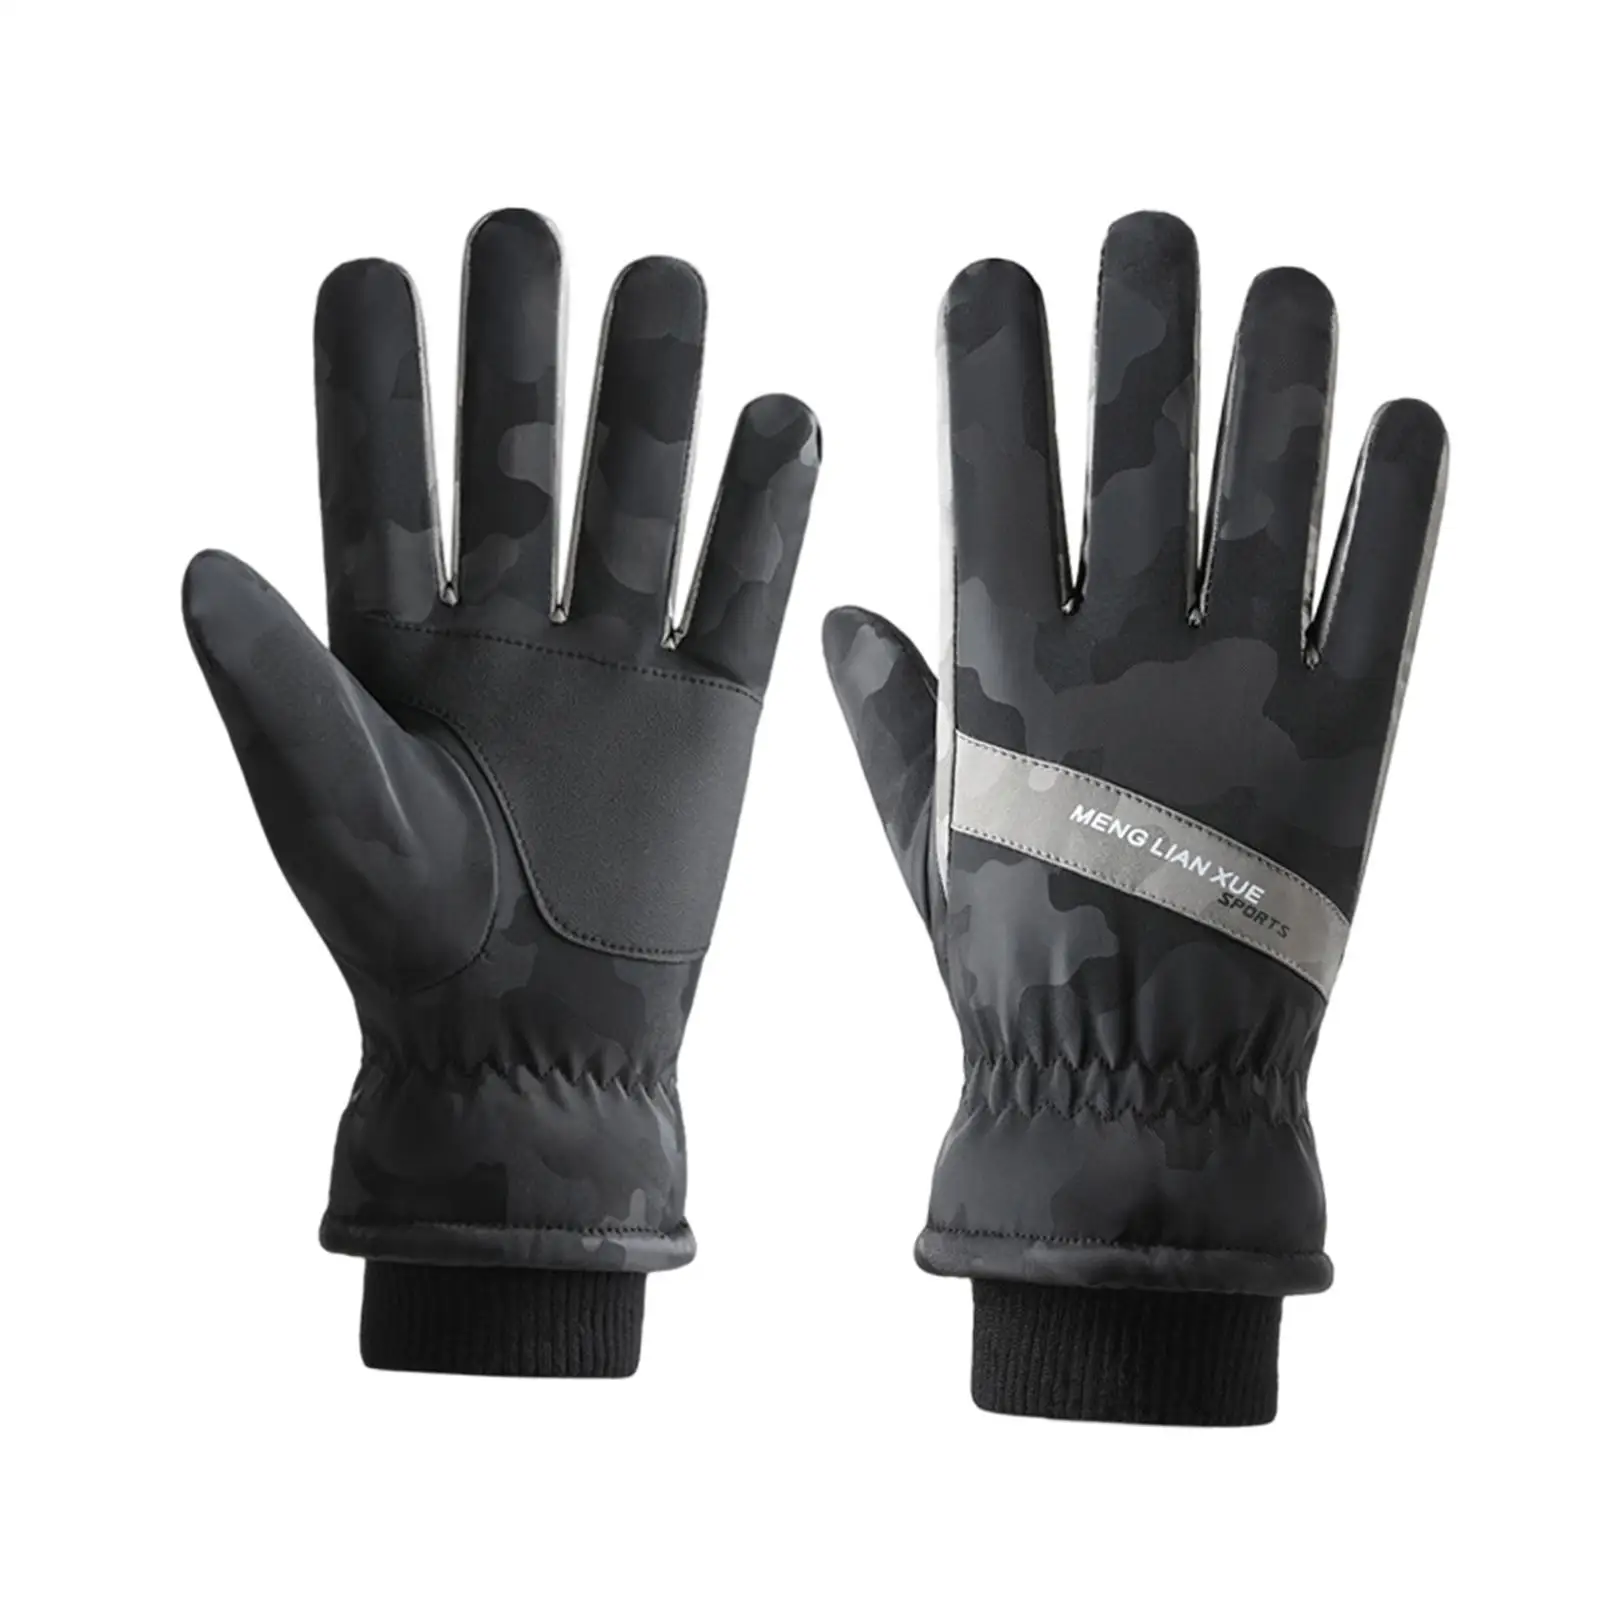 Winter Gloves Touchscreen Mittens Anti Slip for Running Skiing Sports Gloves